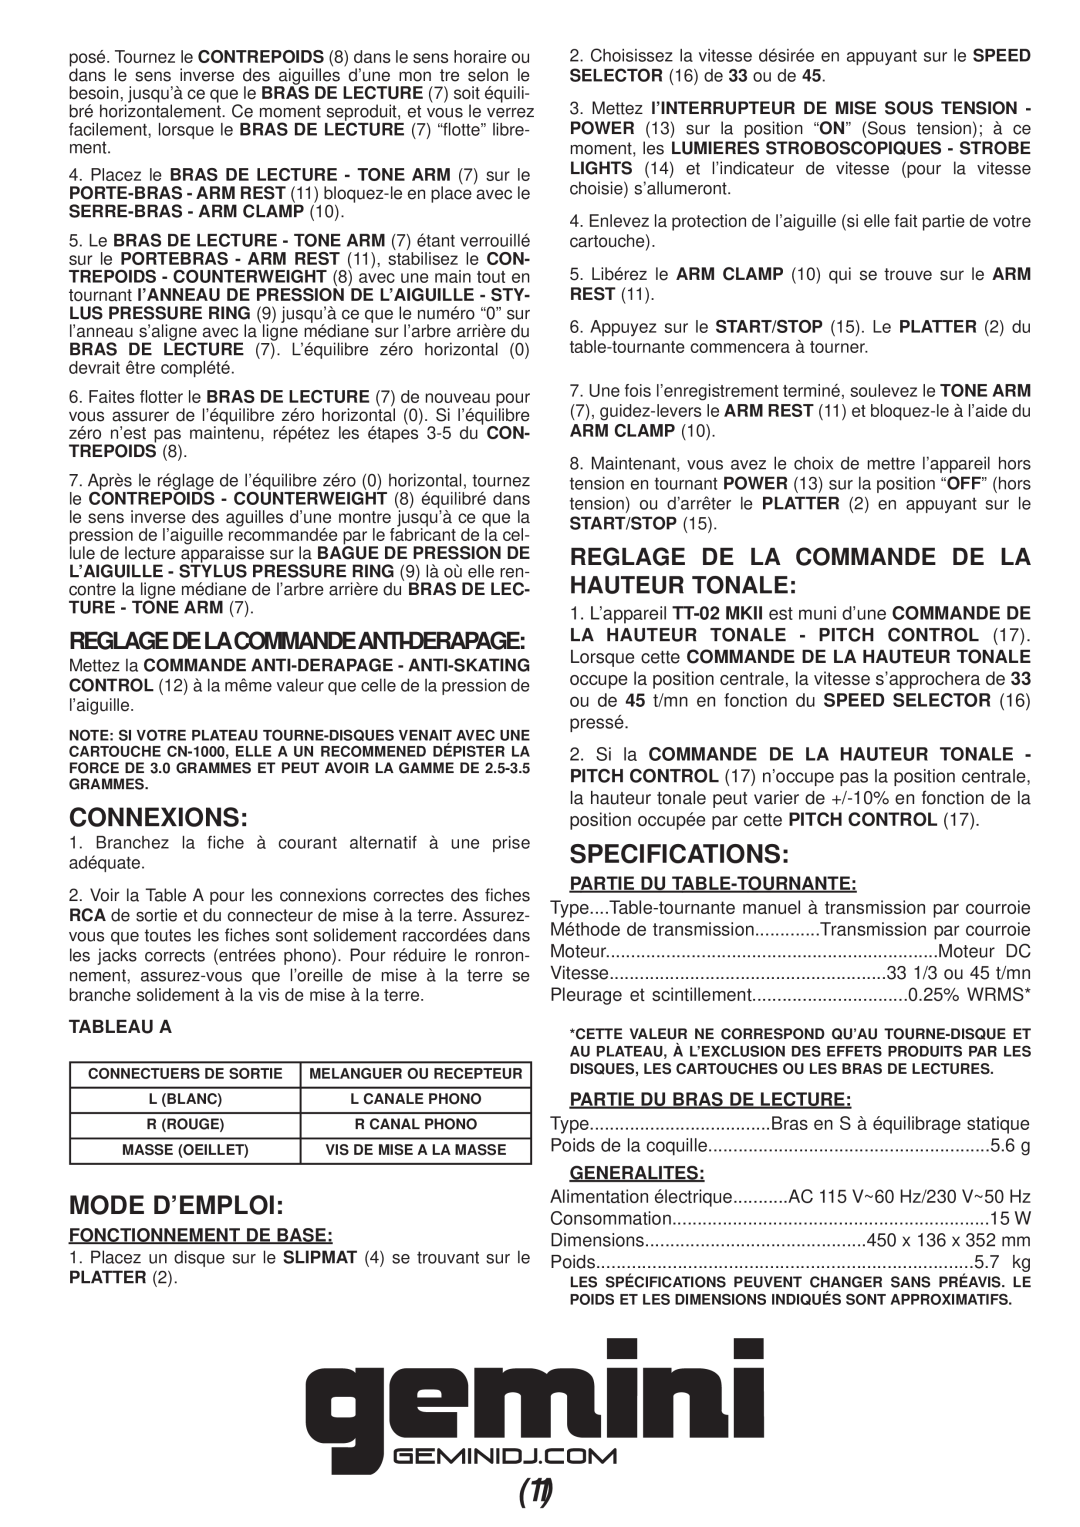 Gemini Industries TT-002MKII manual Connexions, Mode D’Emploi, Reglage De La Commande De La Hauteur Tonale, Specifications 